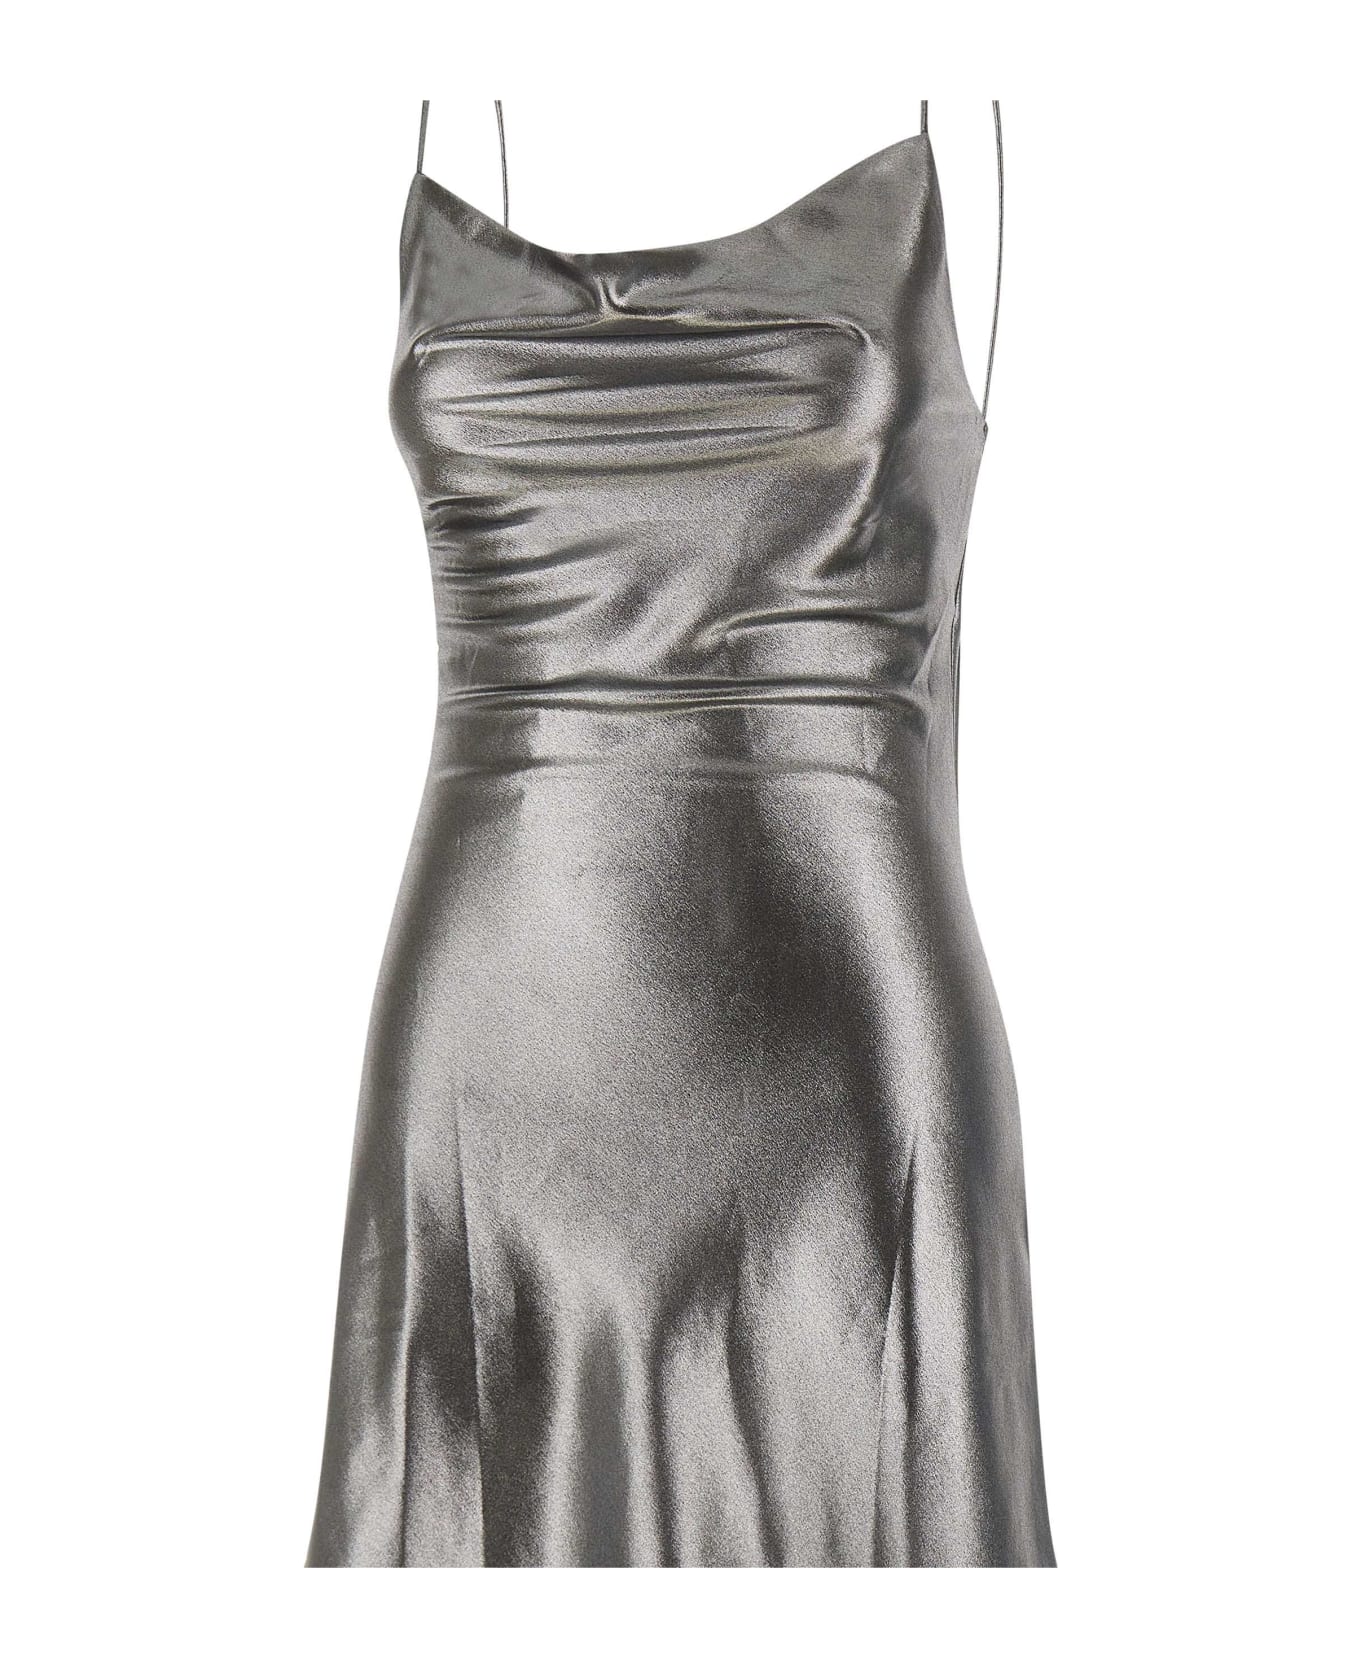 Rotate by Birger Christensen "metallic Mini Slip Dress" - SILVER